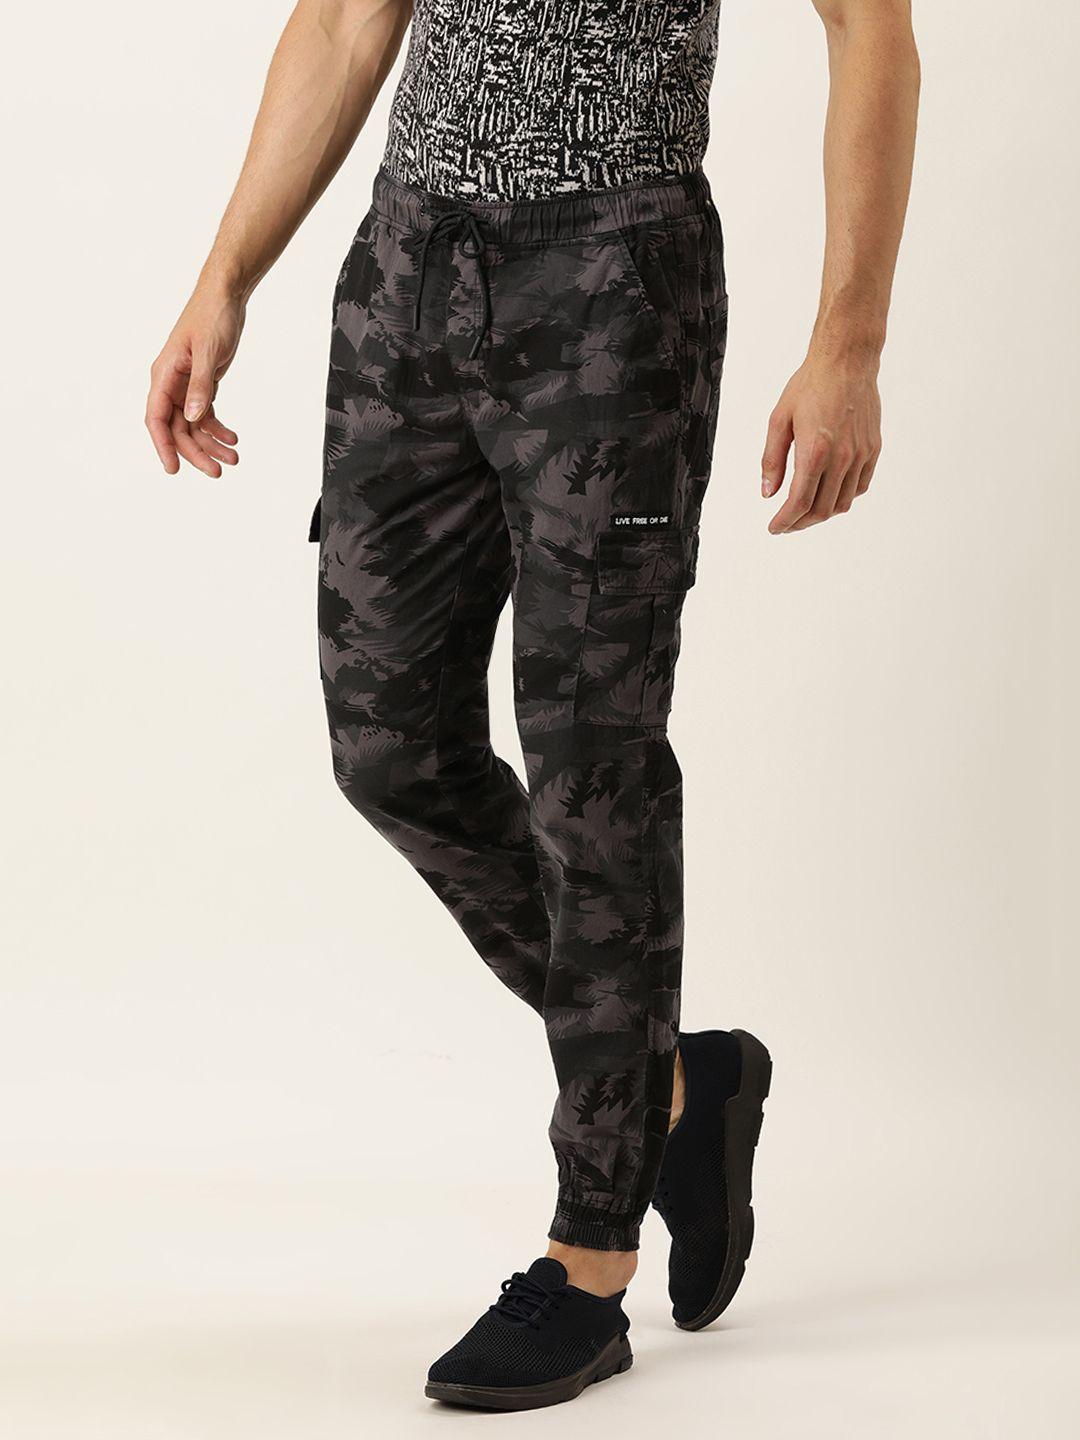 ivoc men black & grey camouflage printed slim fit cargo joggers